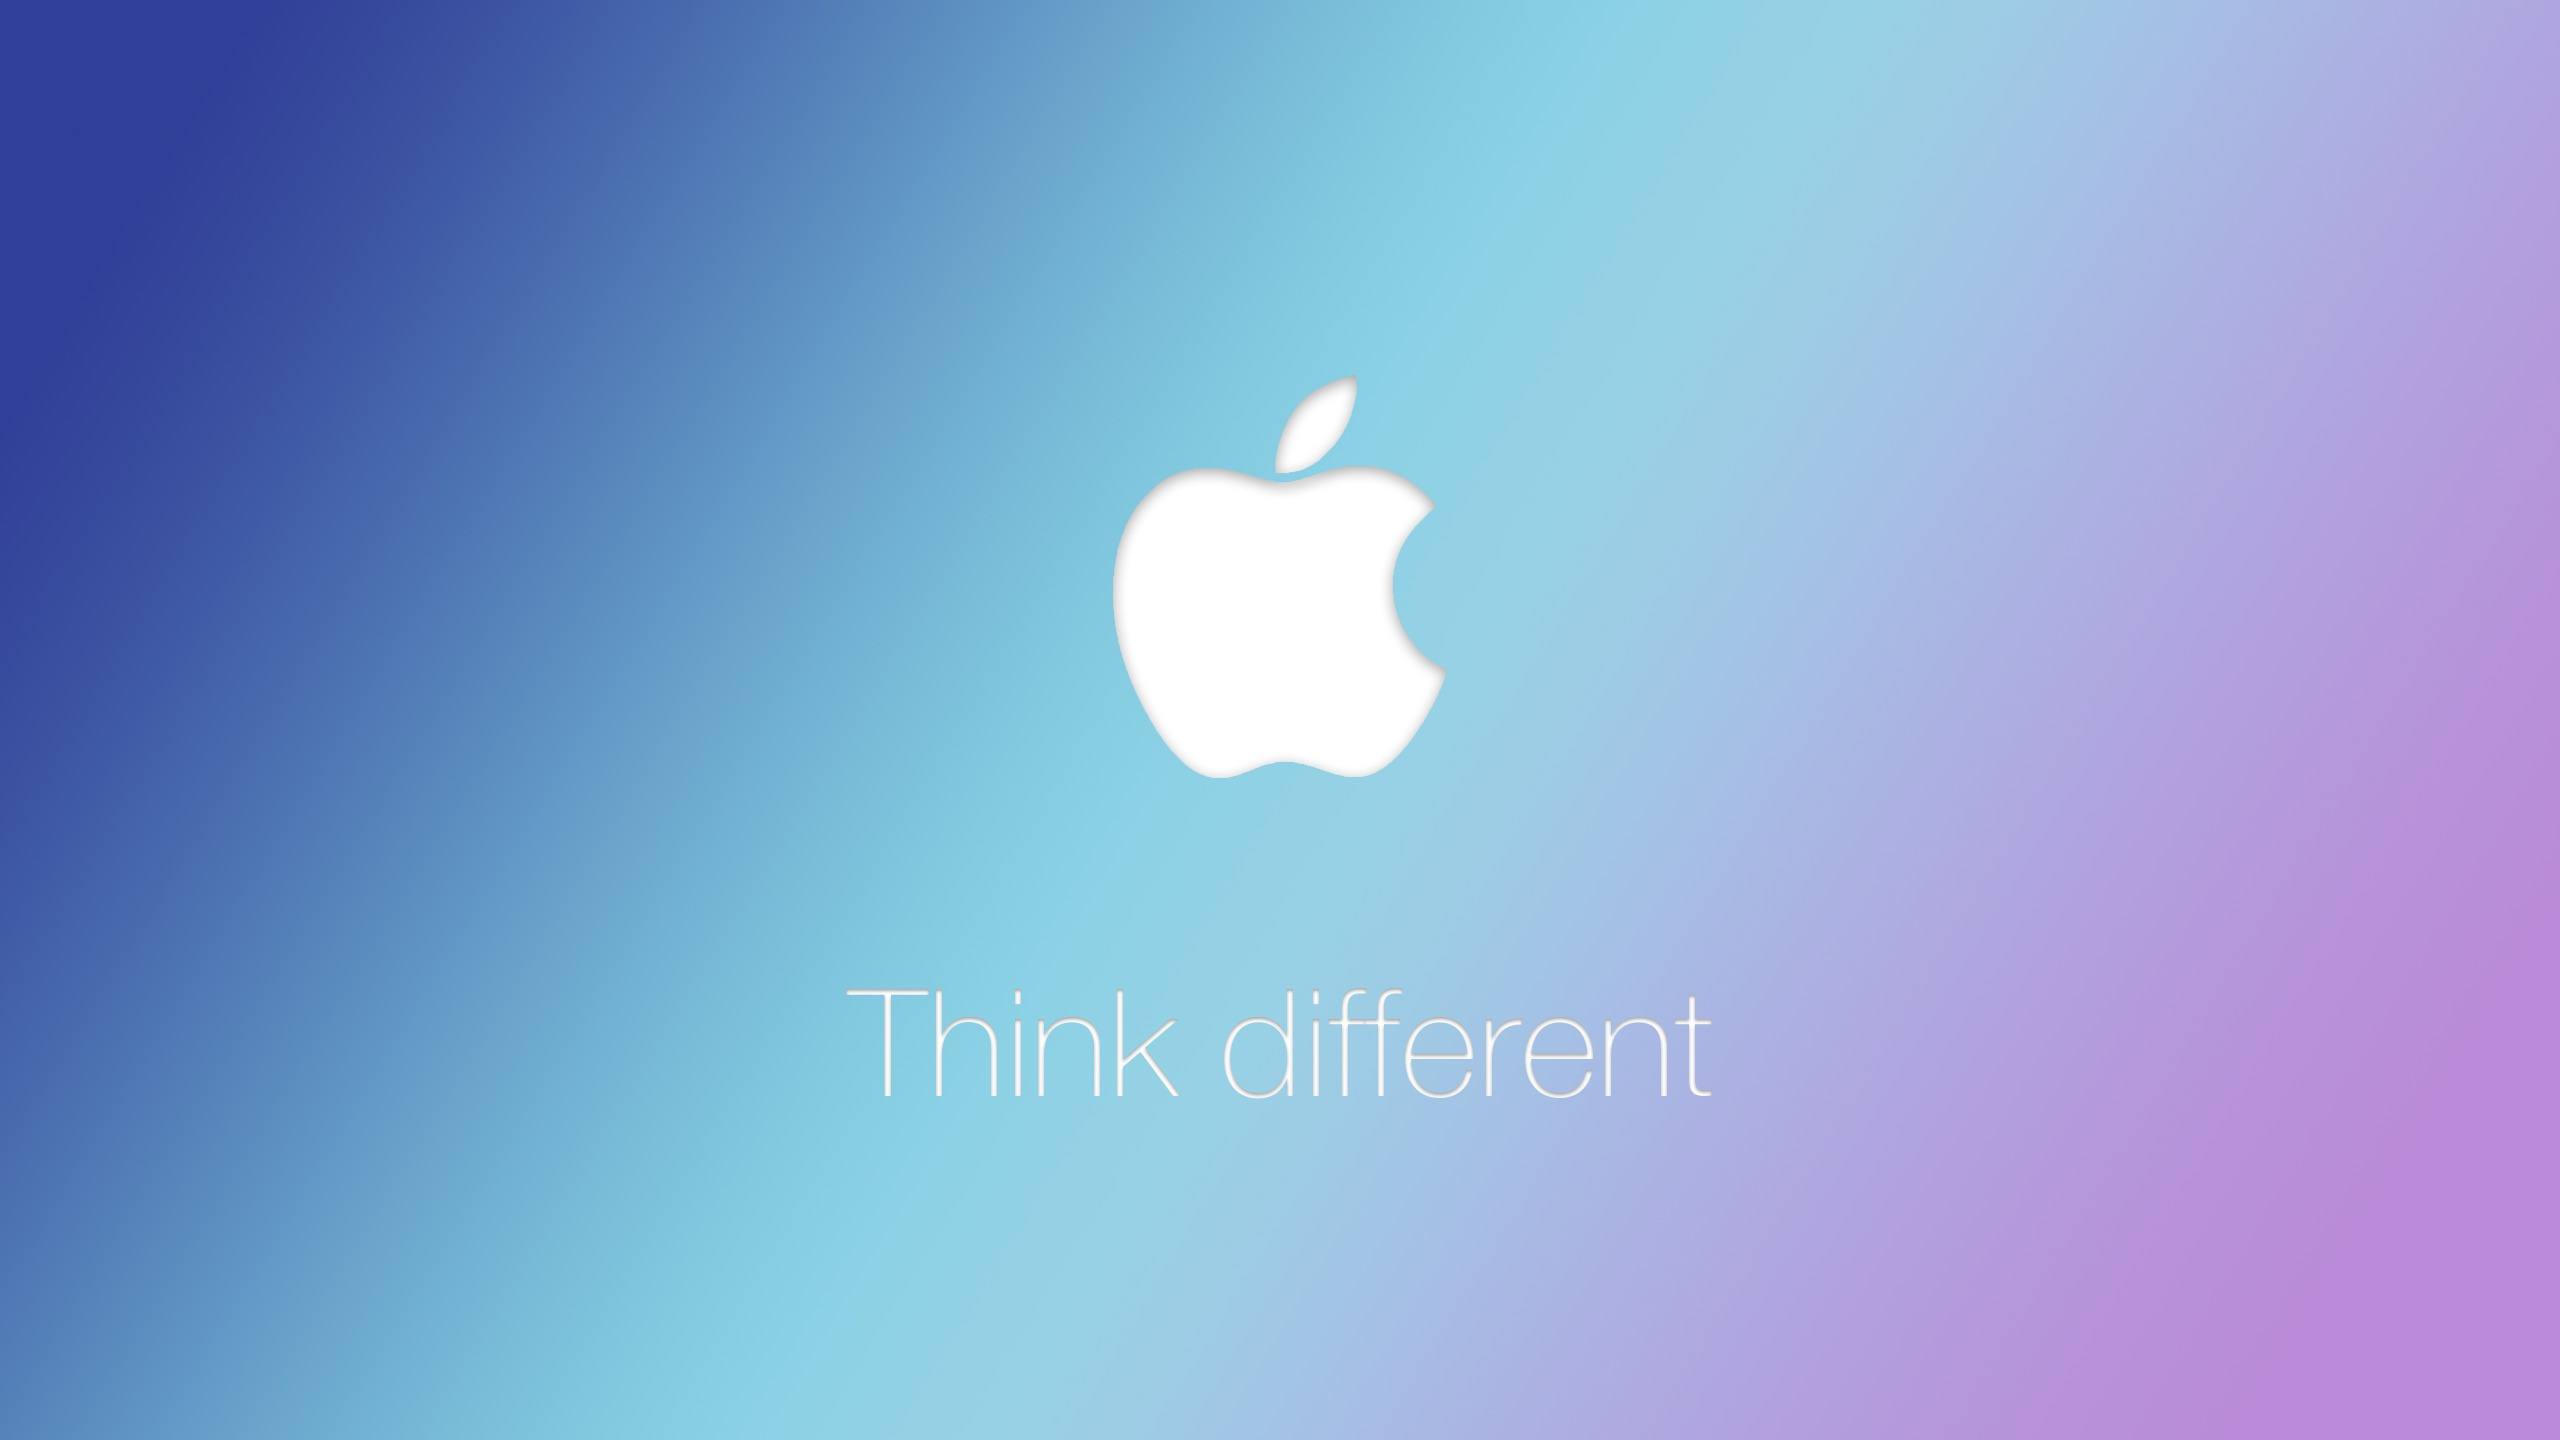 2560x1440 Download wallpaper Apple, Apple, logo, slogan, Think different, section minimalism in resoluti